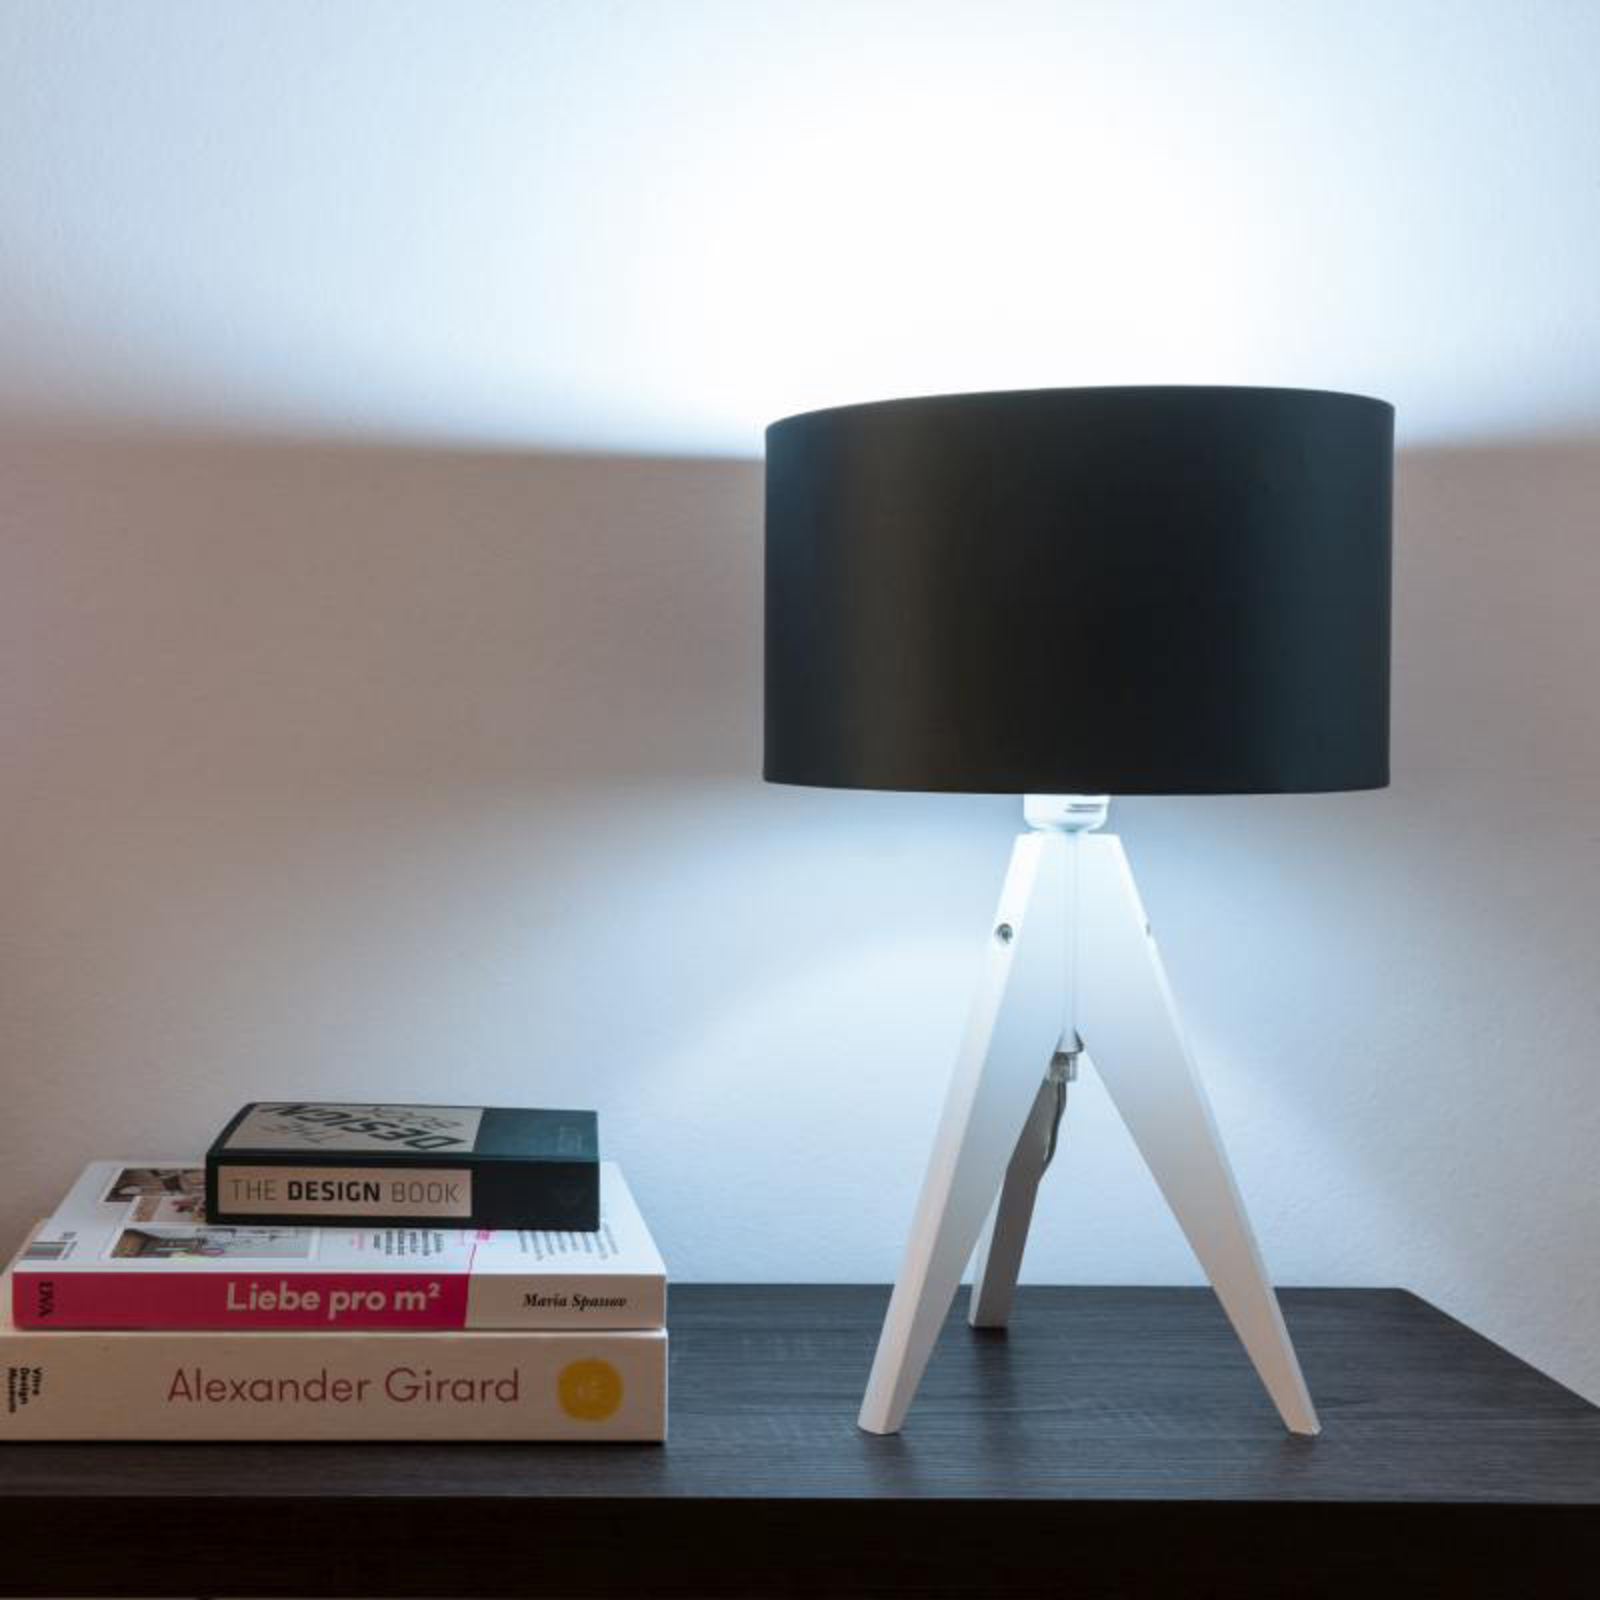 Müller Licht tint white+color LED lamp E14 4,9W